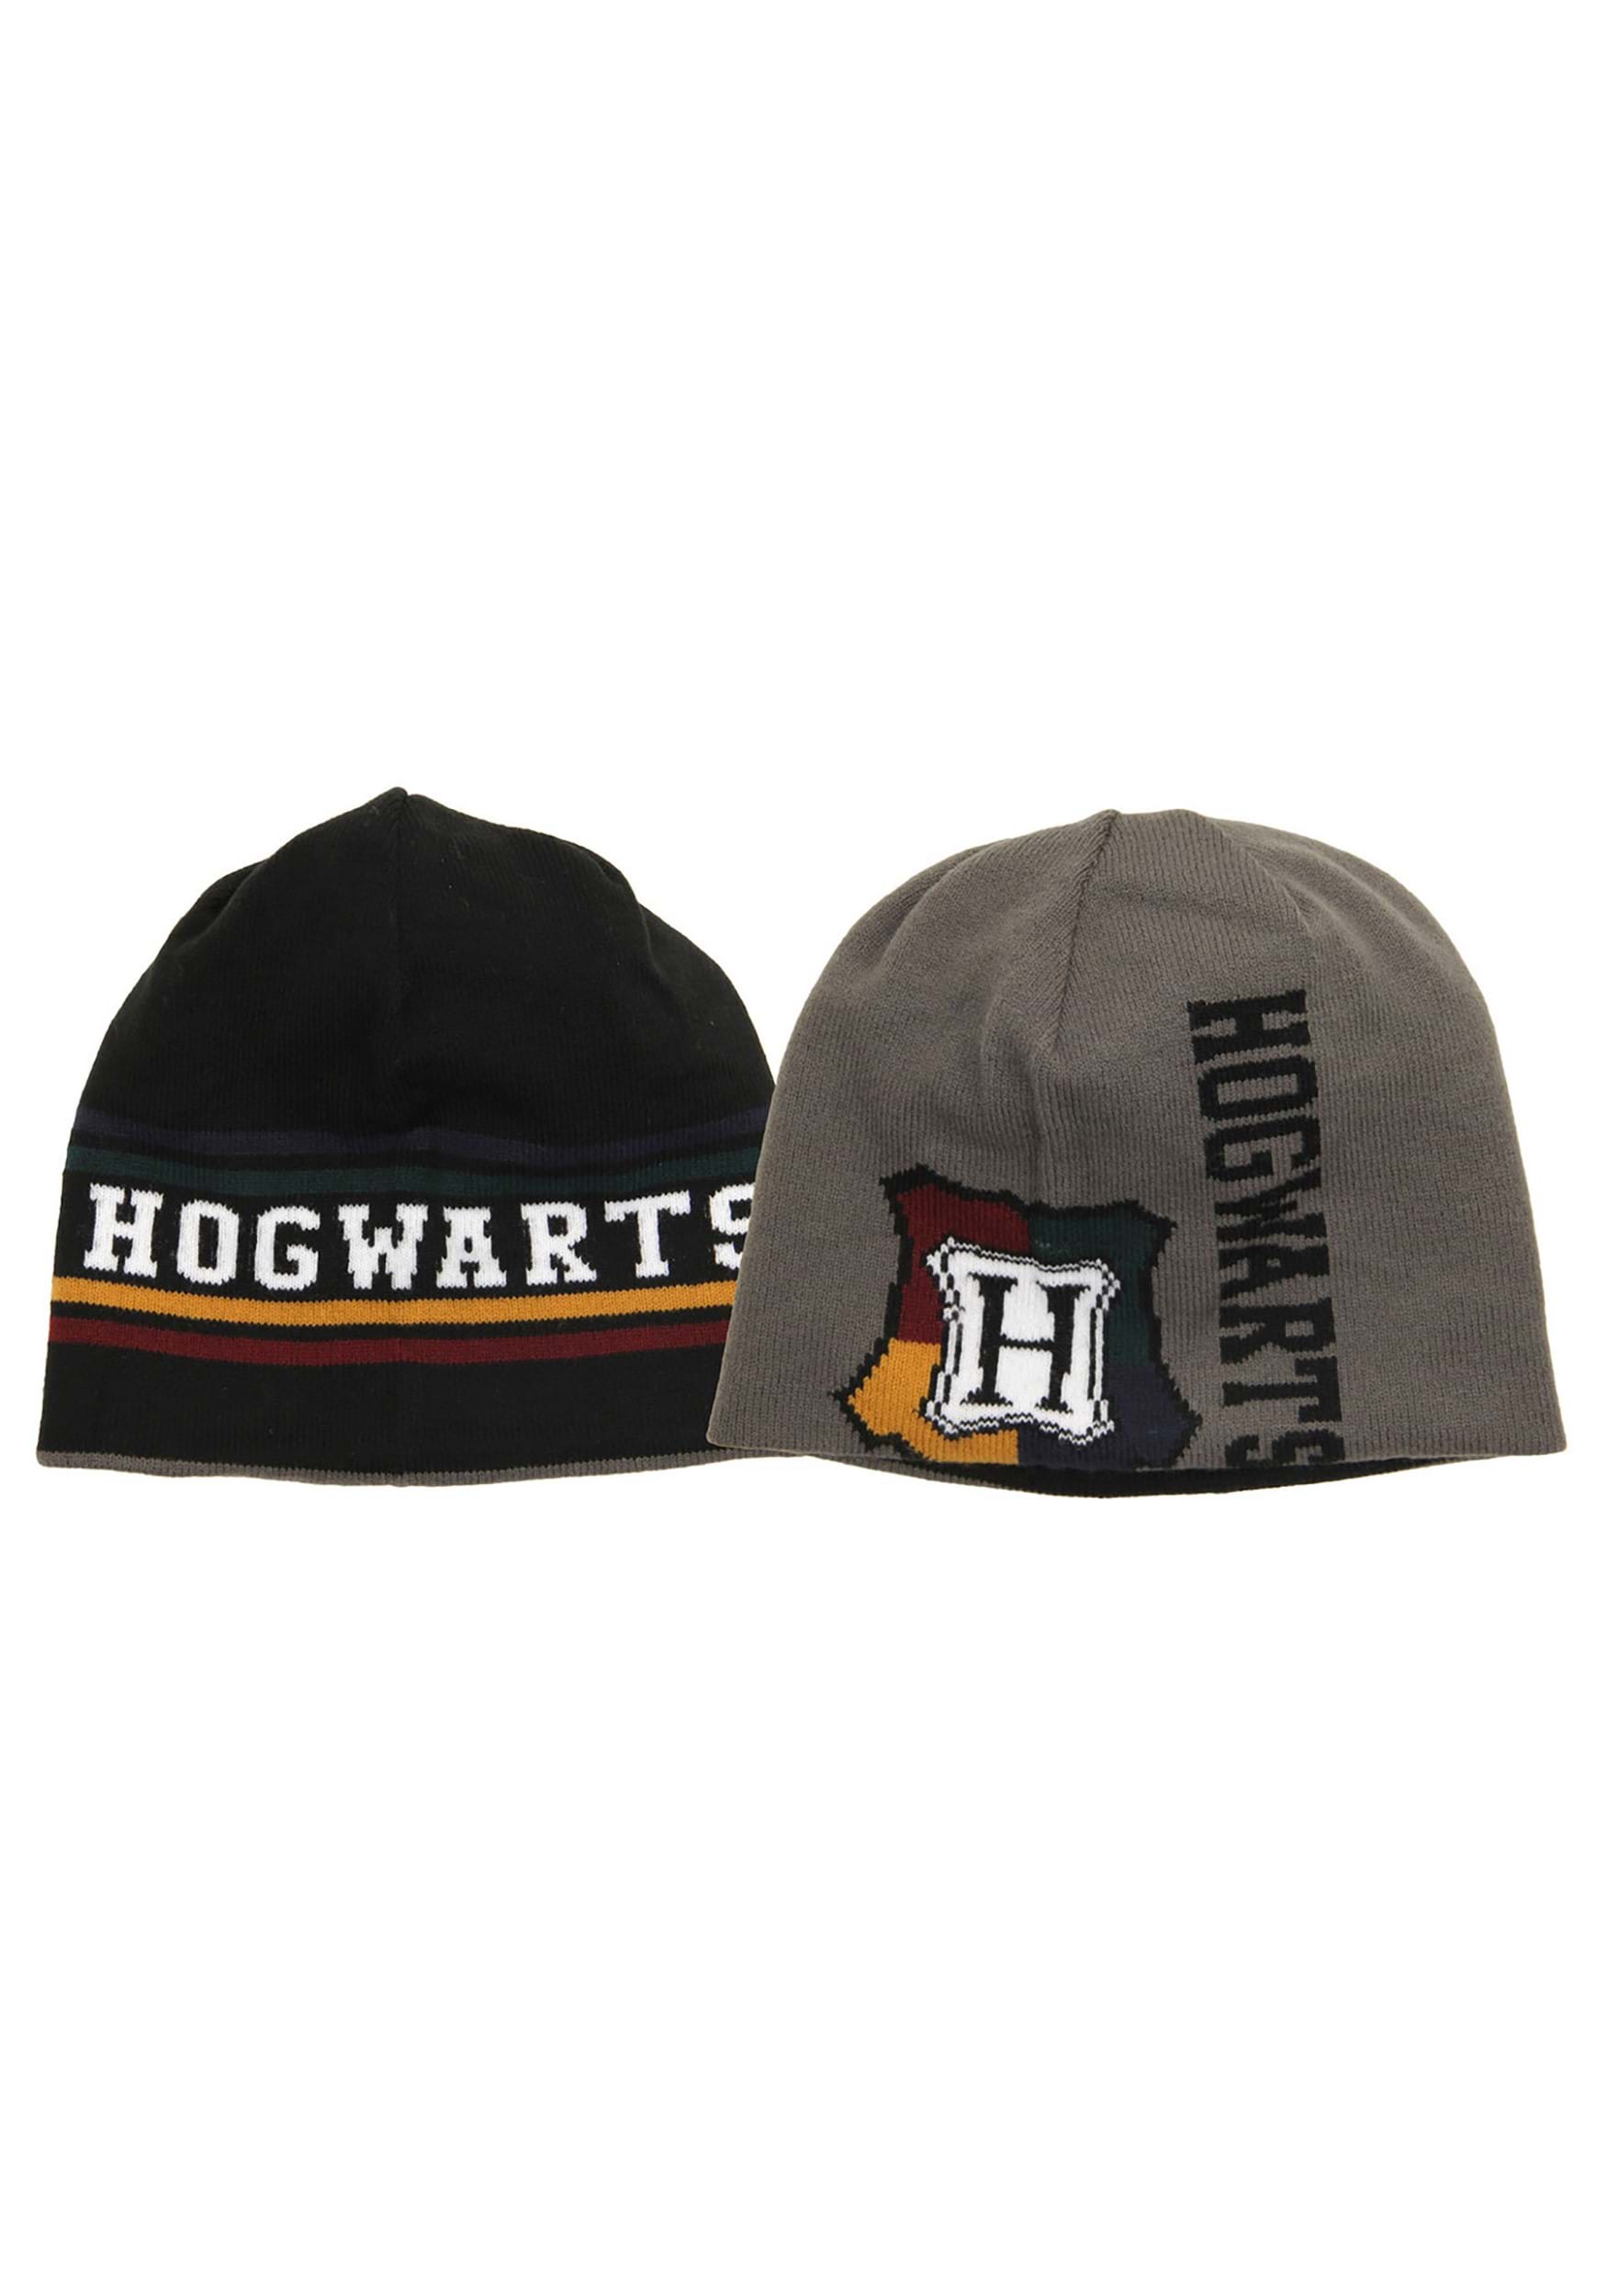 Hogwarts Reversible Black Knit Beanie , Hogwarts Winter Hats